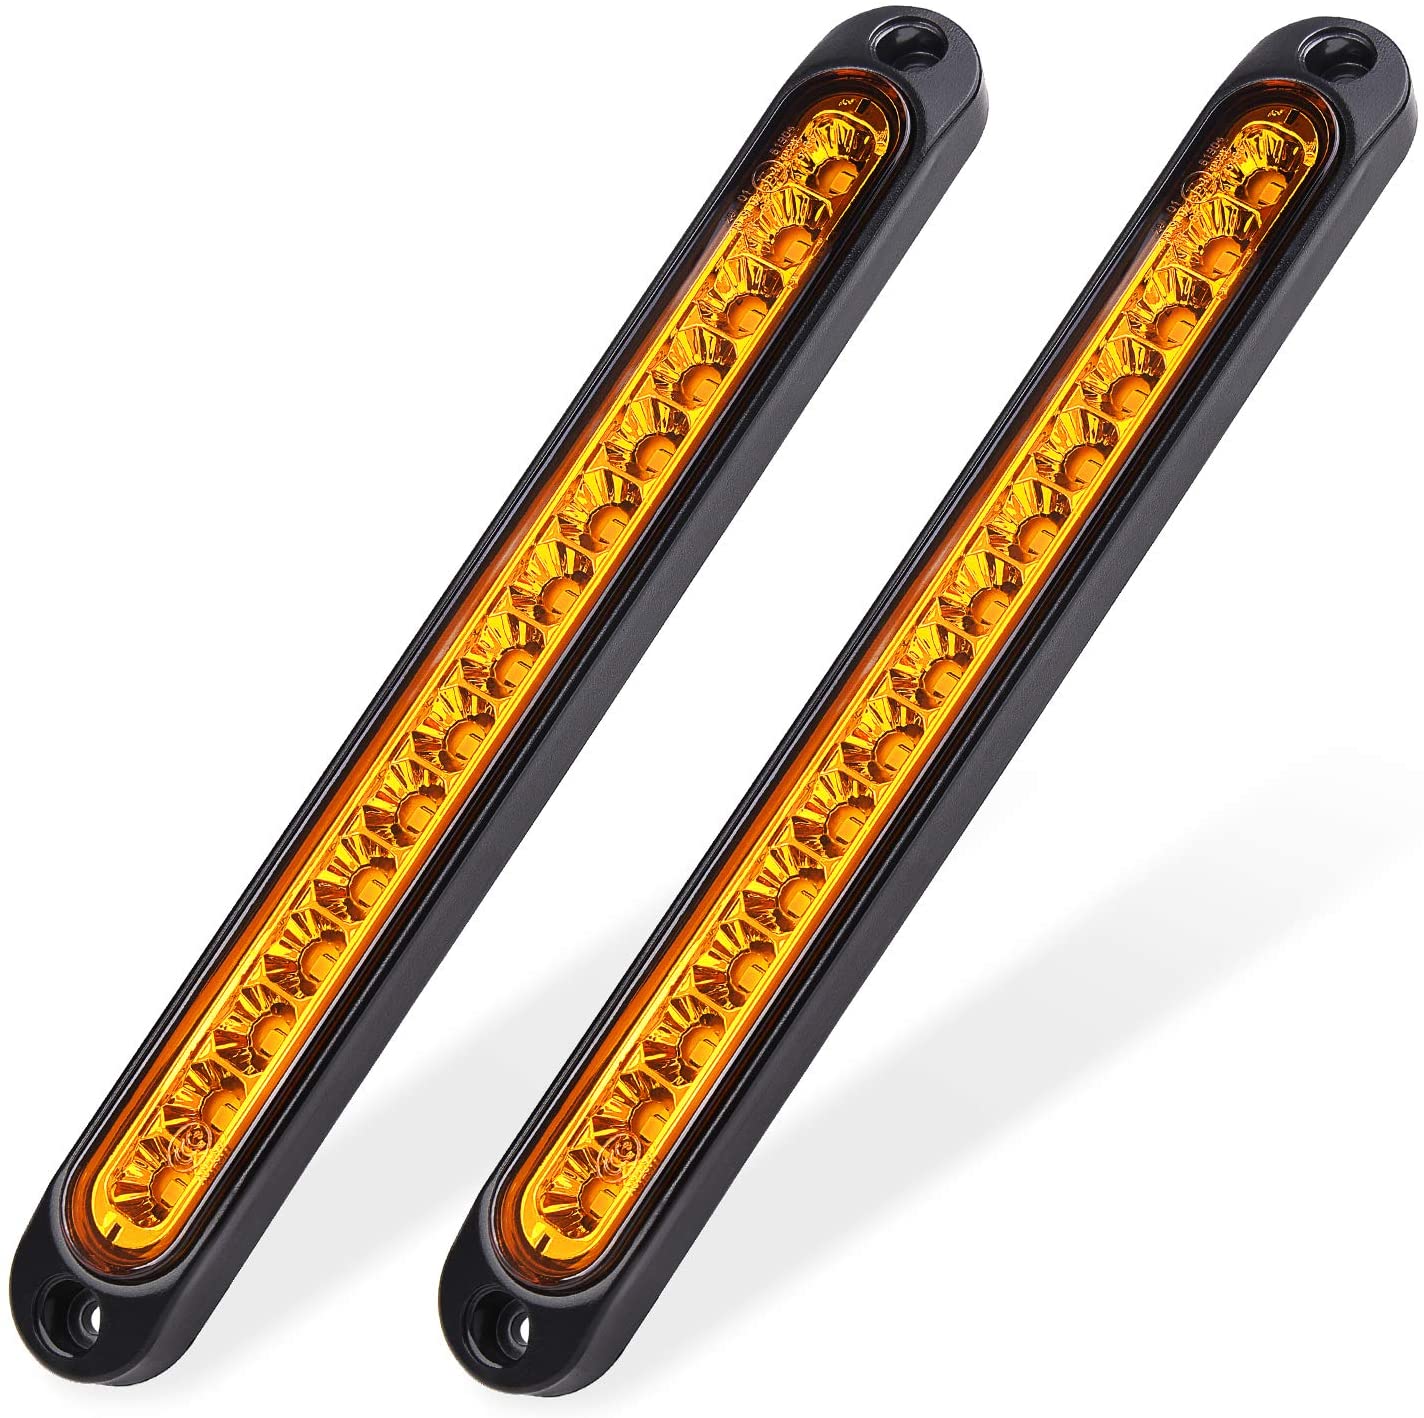 2Pcs 10'' 15x LEDs Trailer Identification Light Bar Strip, Truck Rear Marker Turn Signal Light, Tail Clearance Light